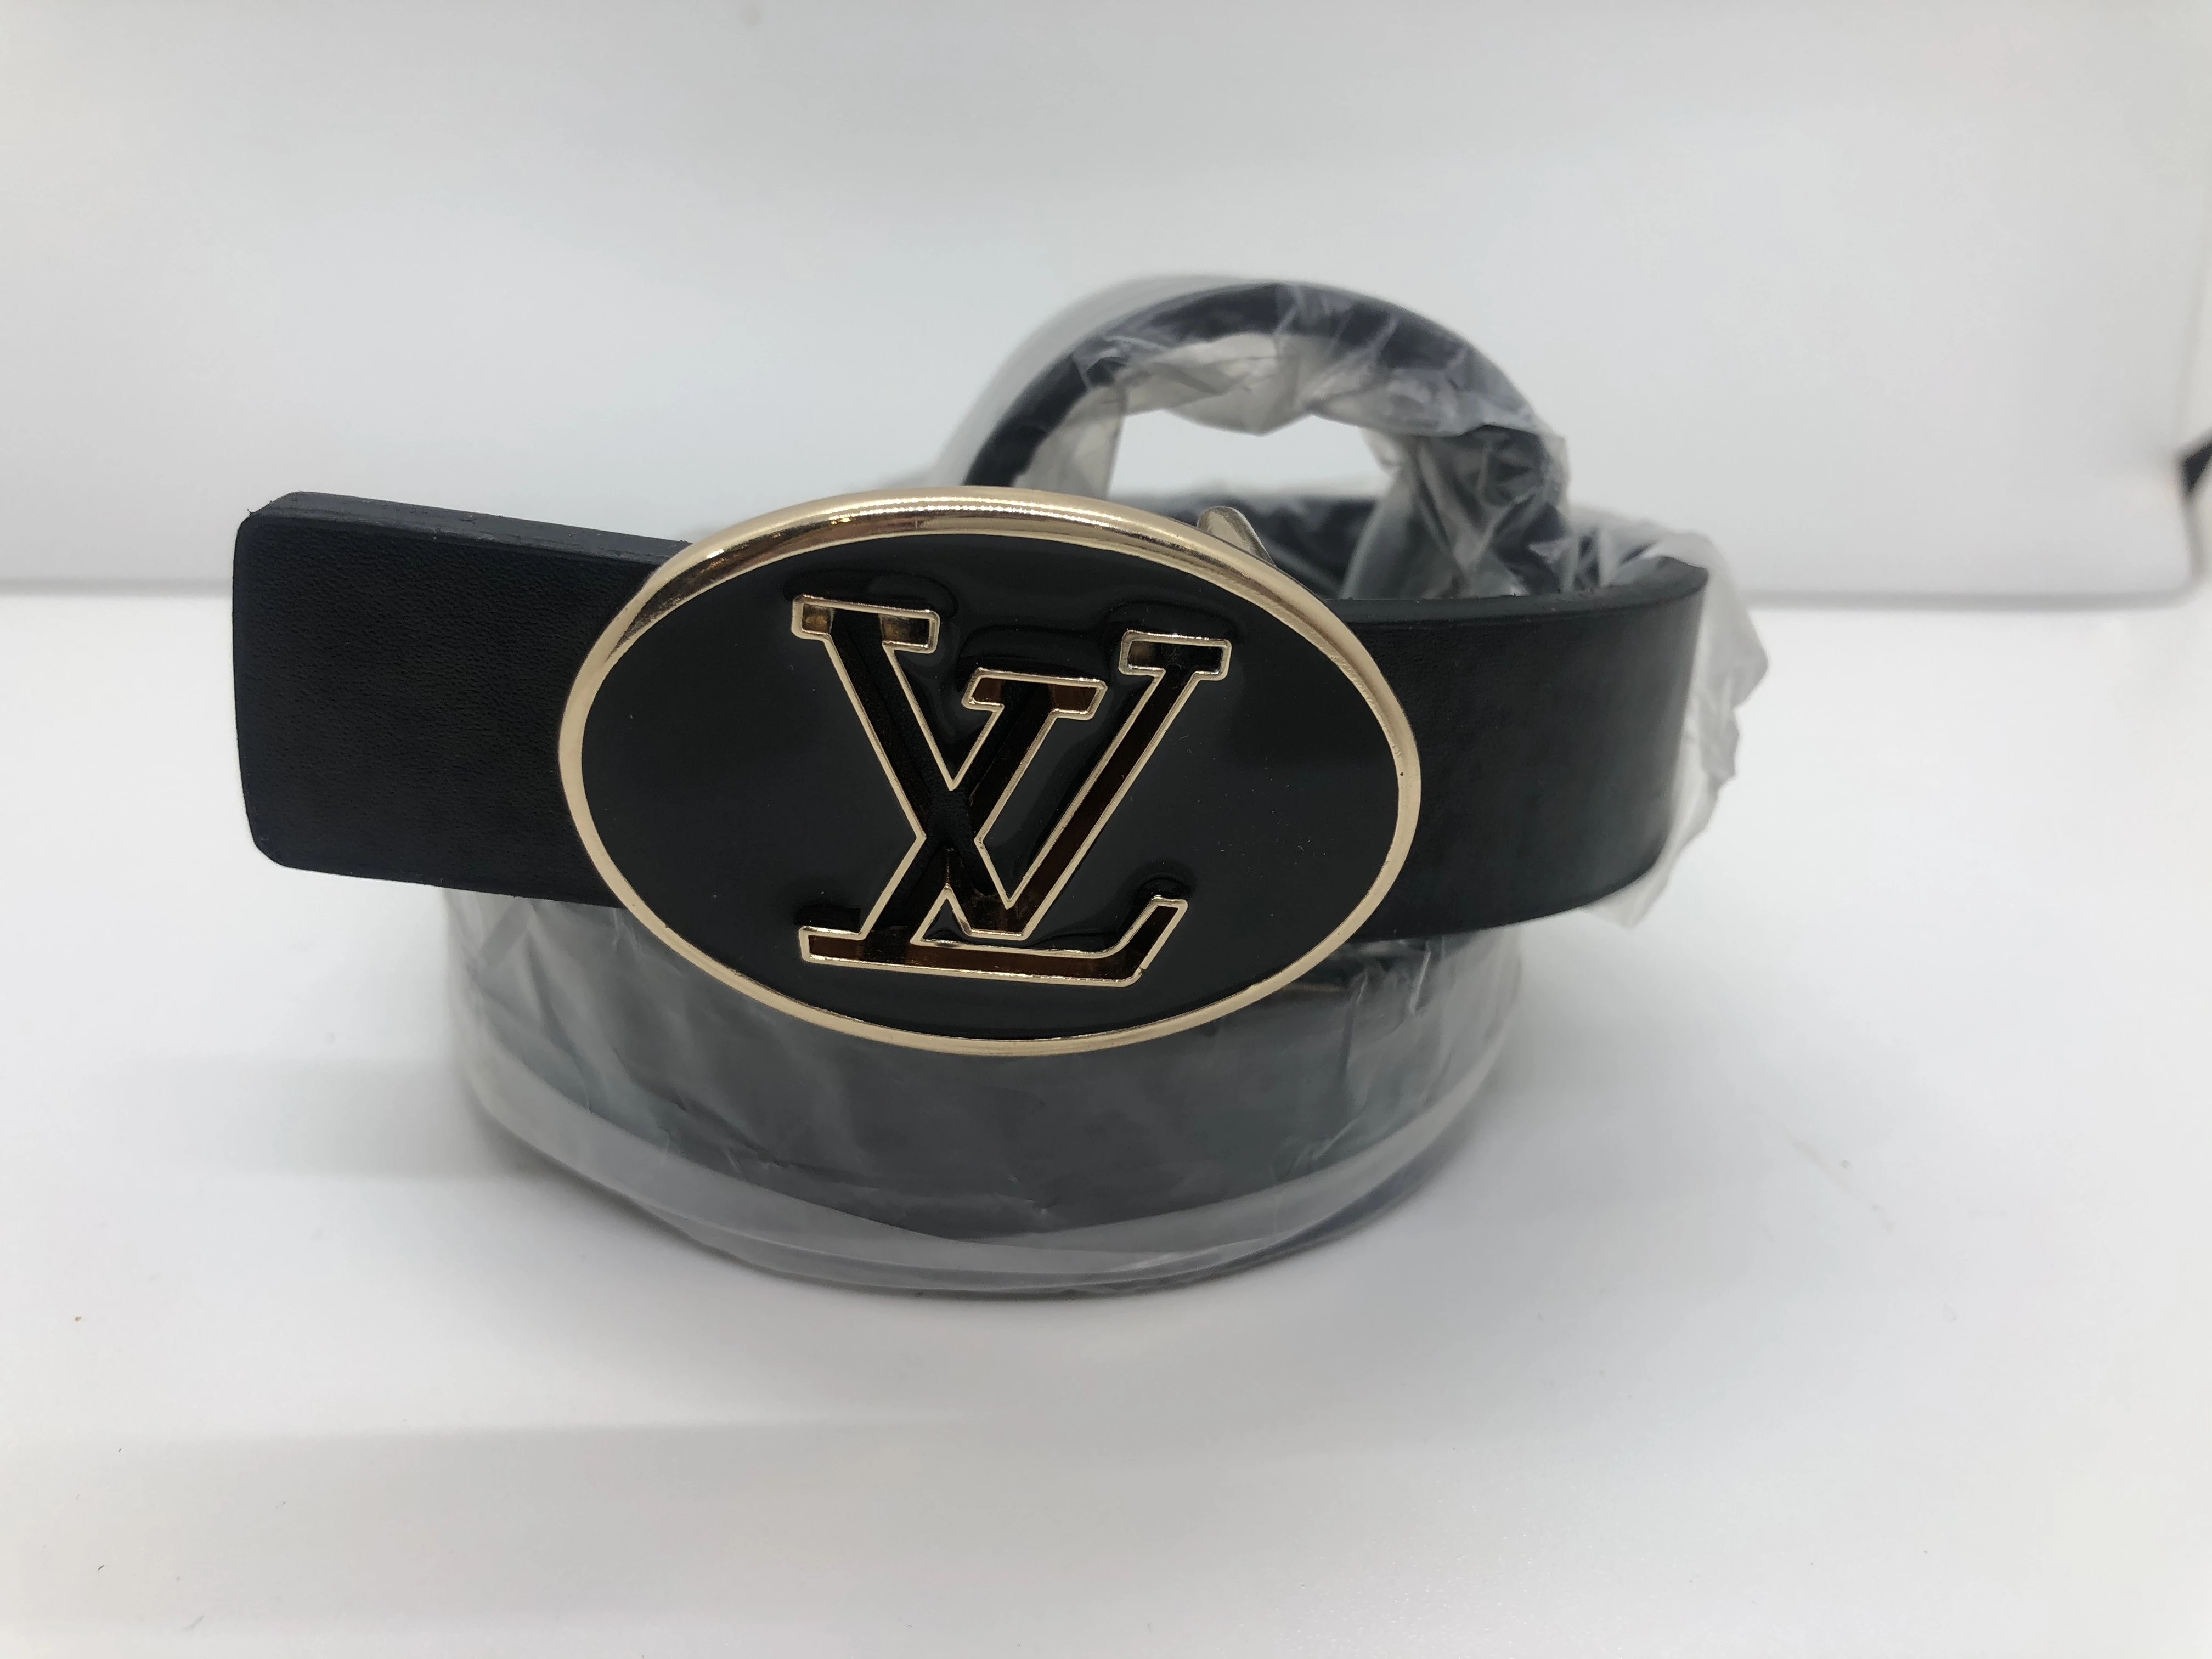 Louis Vuitton women's belt black. Gold * black buckle, with the brand logo finishing